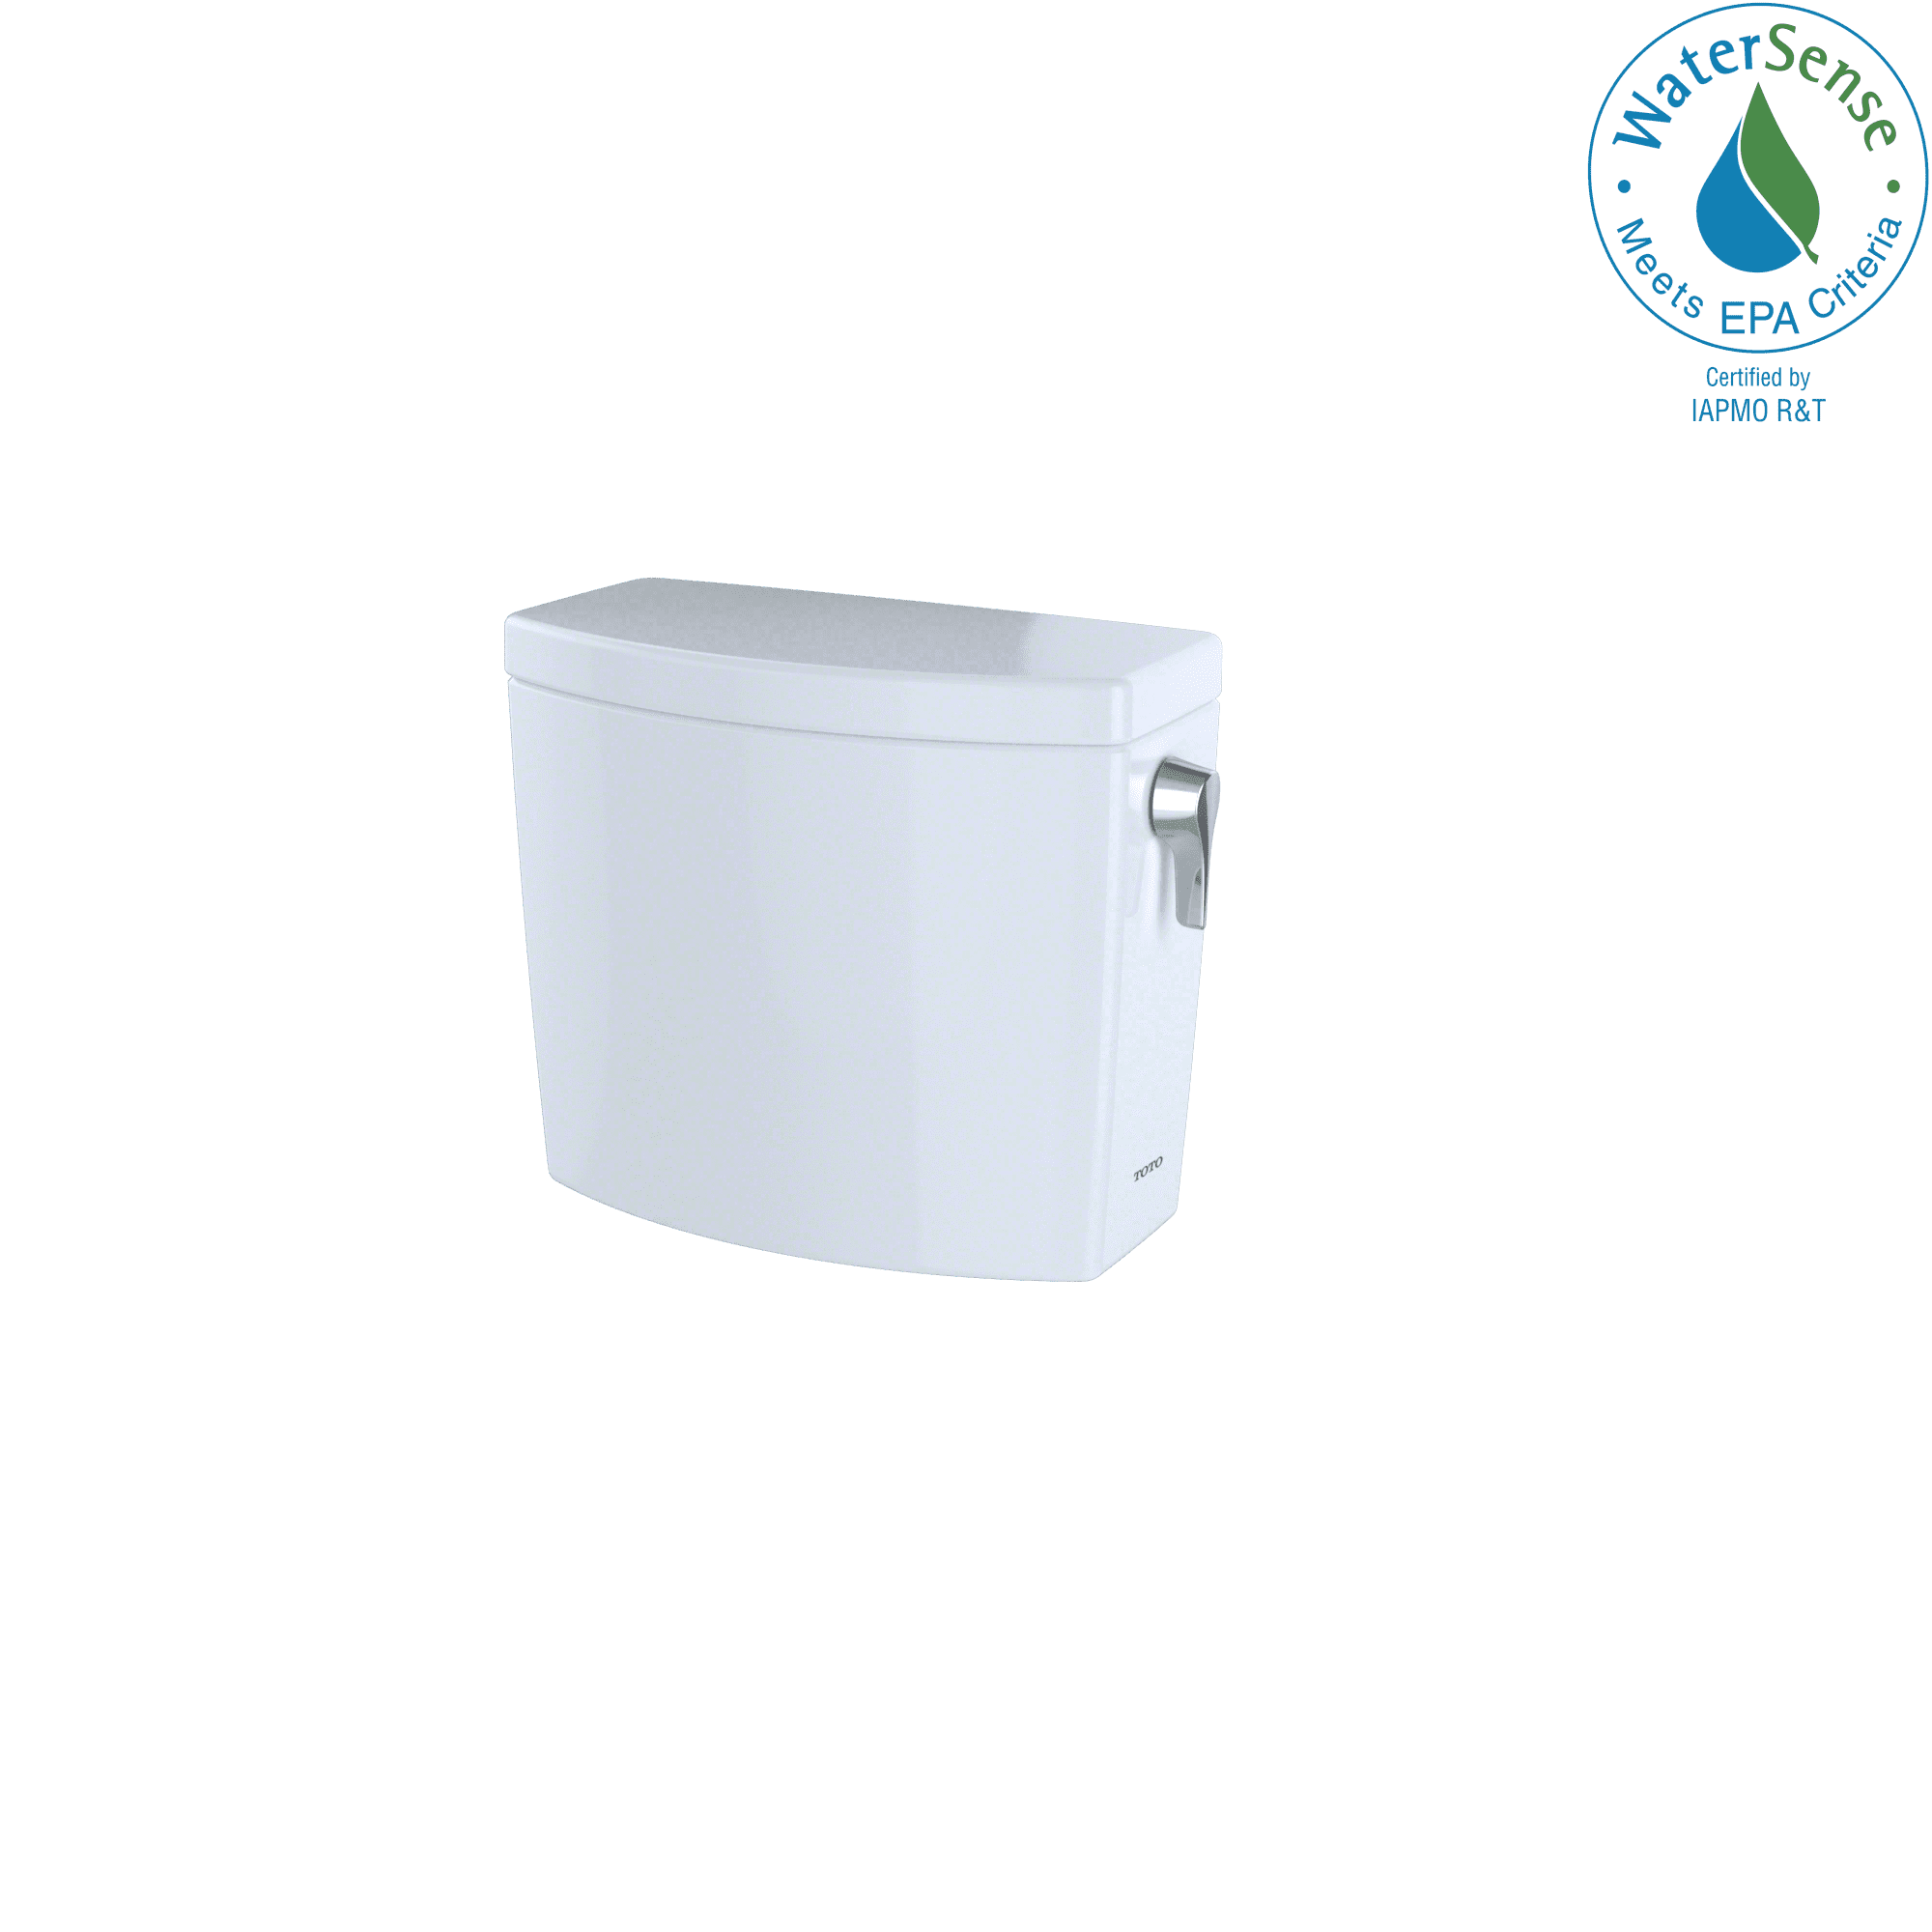 Drake Li 1 Gpf Toilet Tank With Right-hand Trip Lever, Cotton White